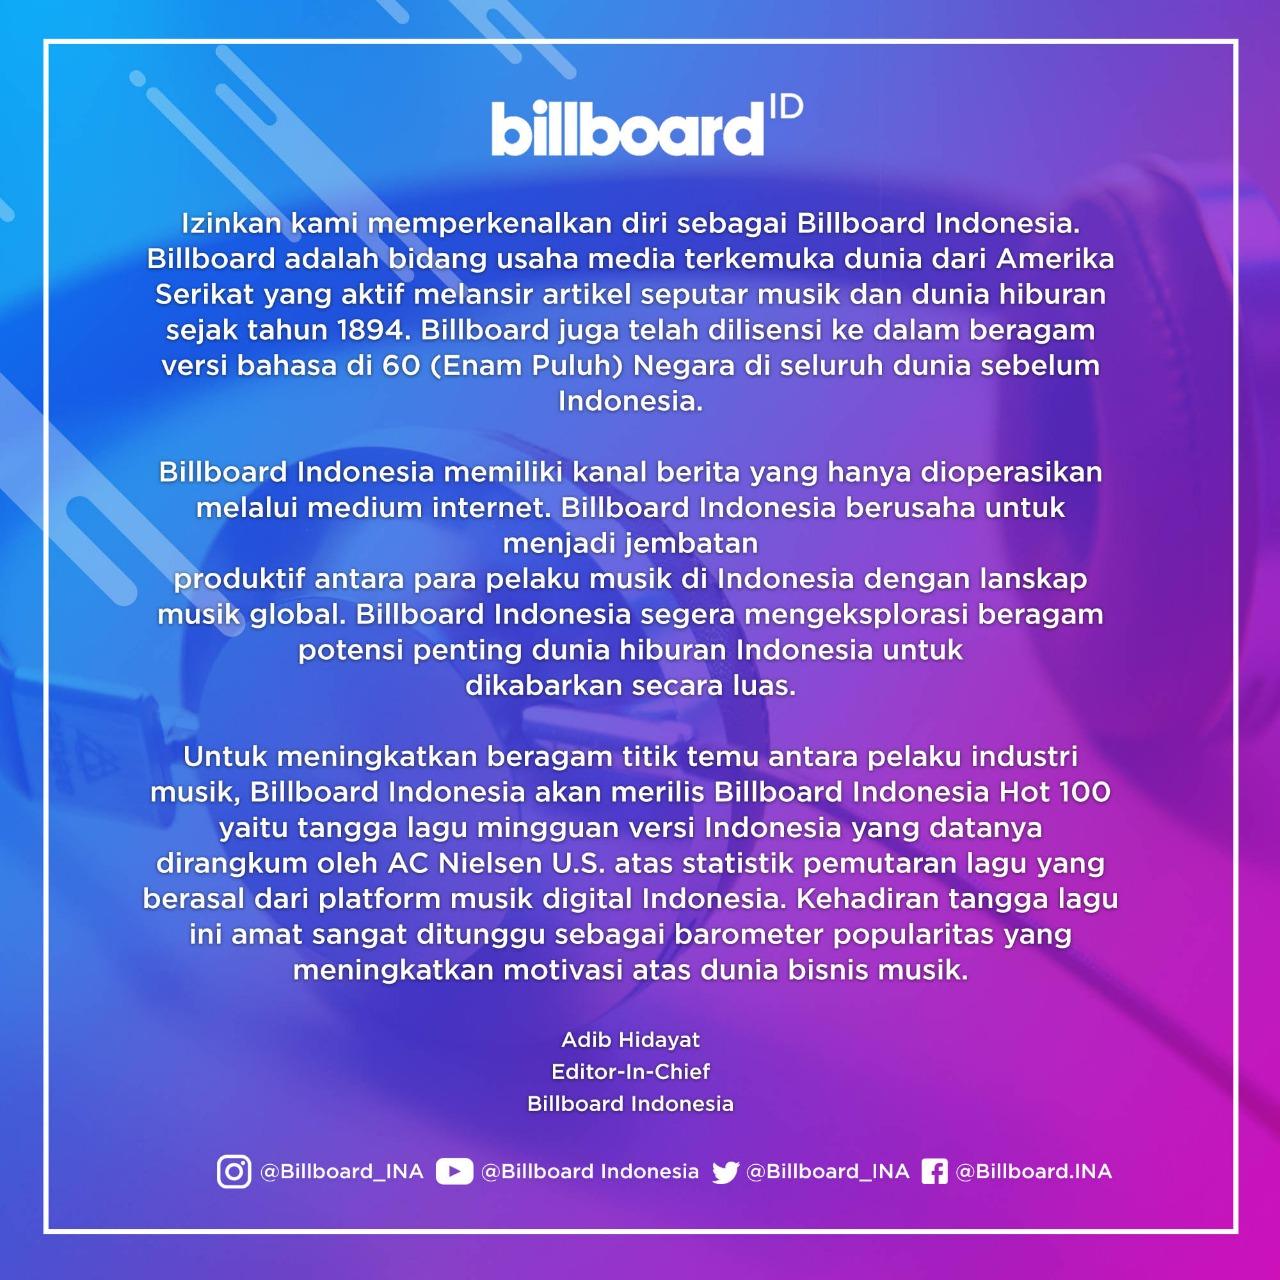 Indonesia Musik Chart